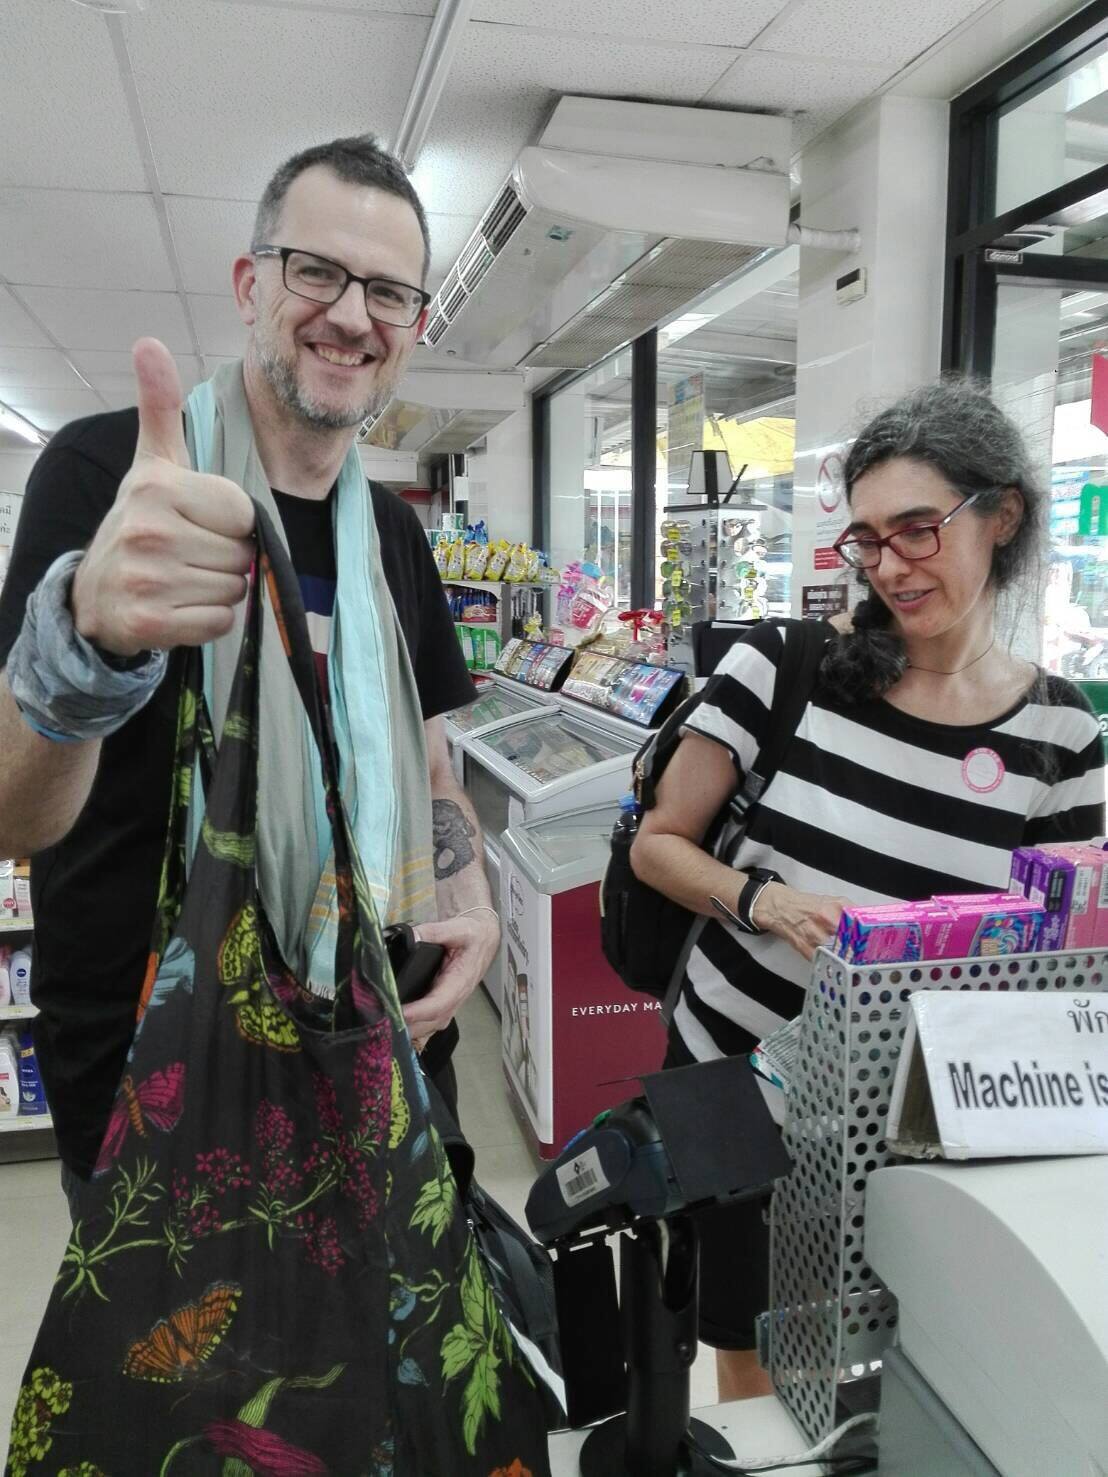 Photos of shoppers: Yimpunsuk/Facebook. 